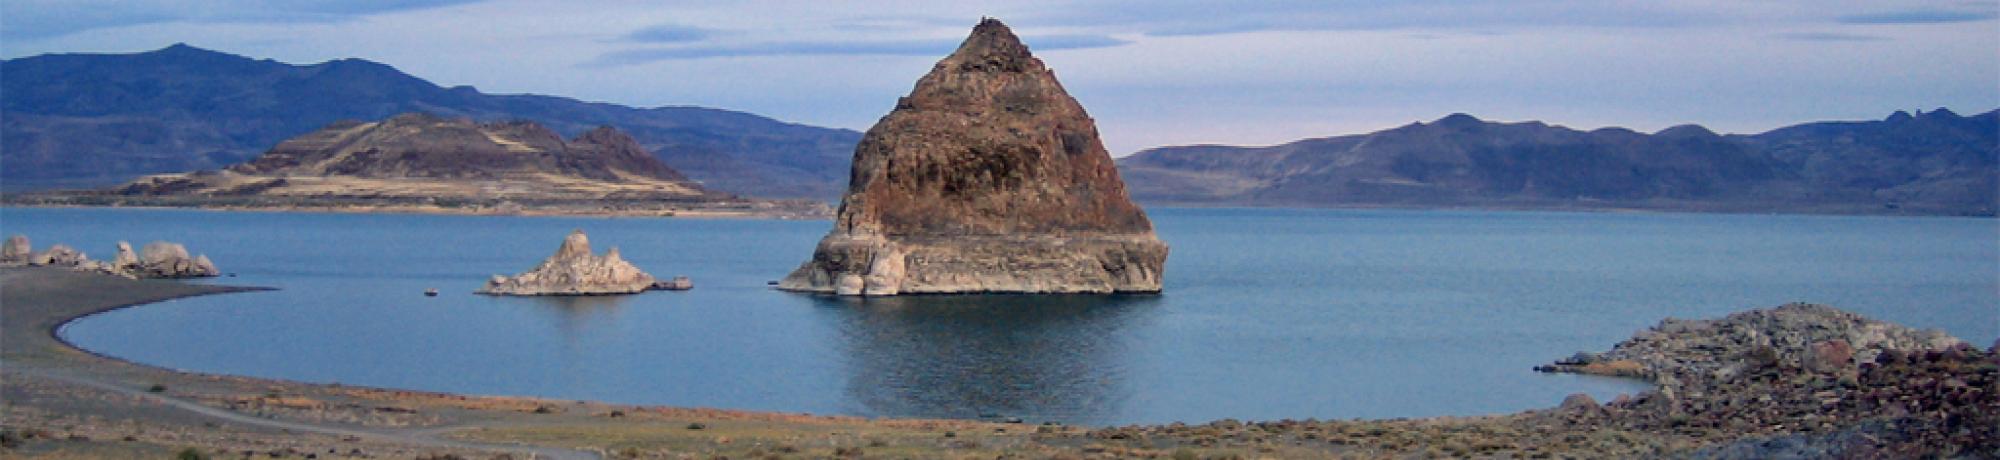 Pyramid Lake in Nevada